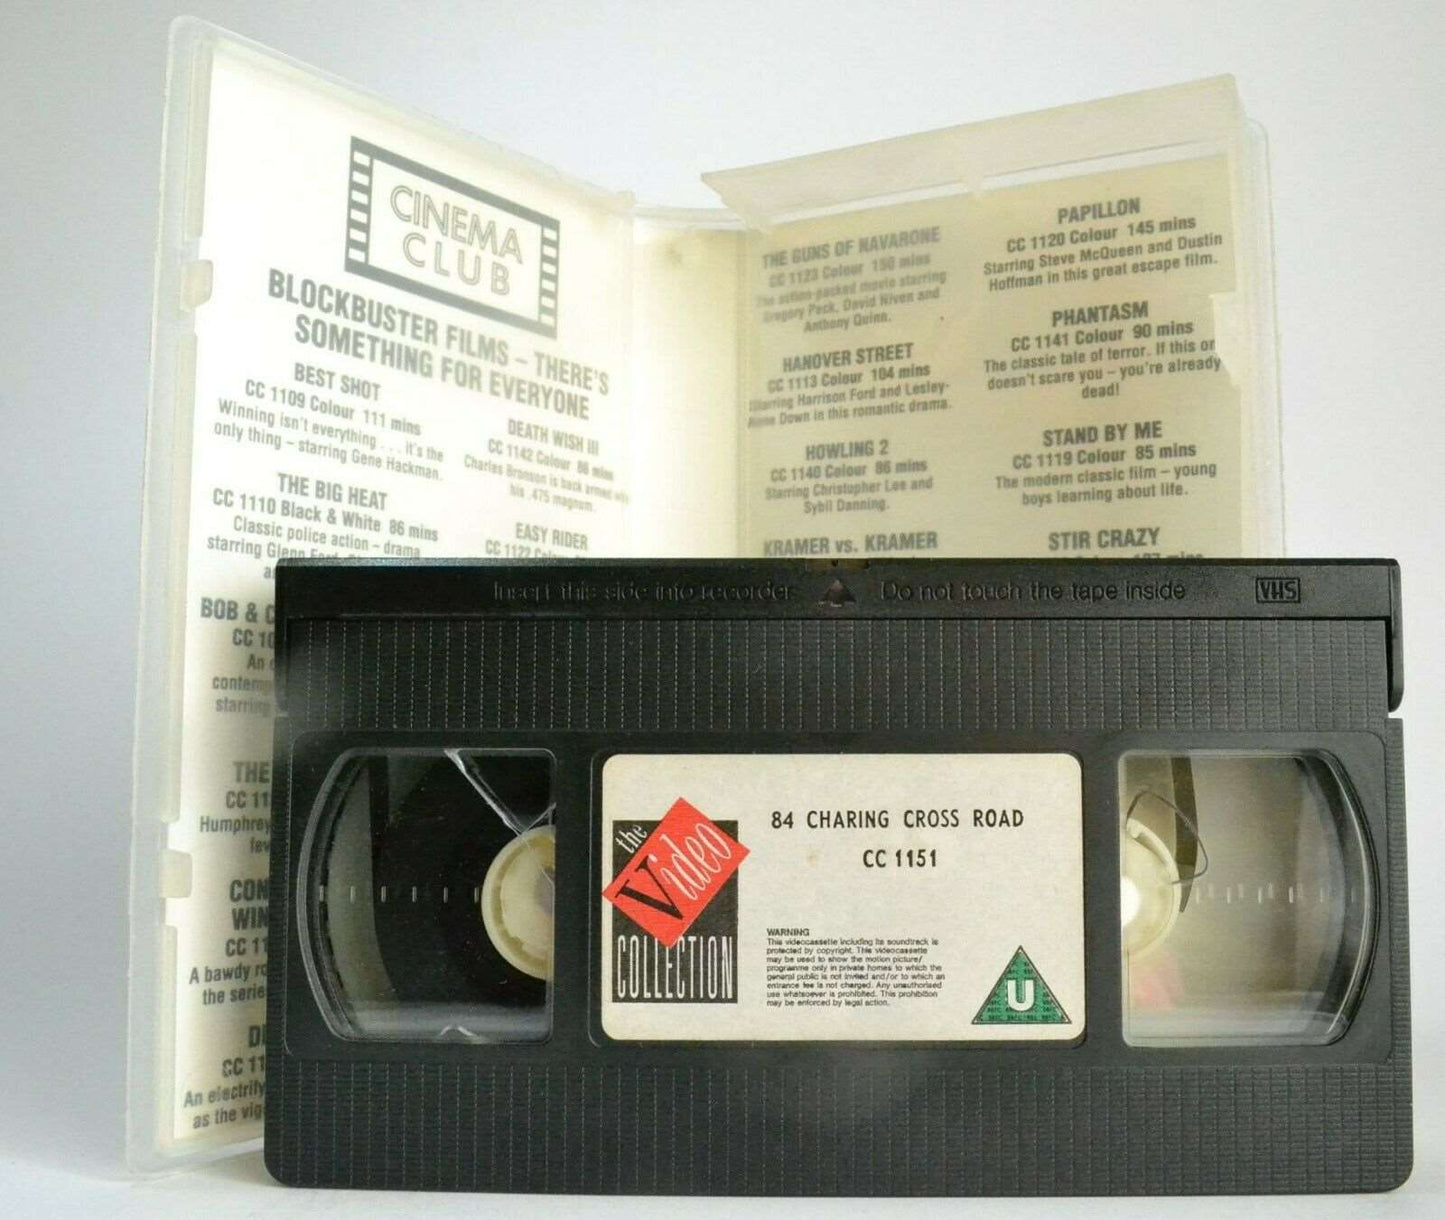 84 Charing Cross Road: Anne Bancroft & Anthony Hopkins [True Story] - Pal VHS-